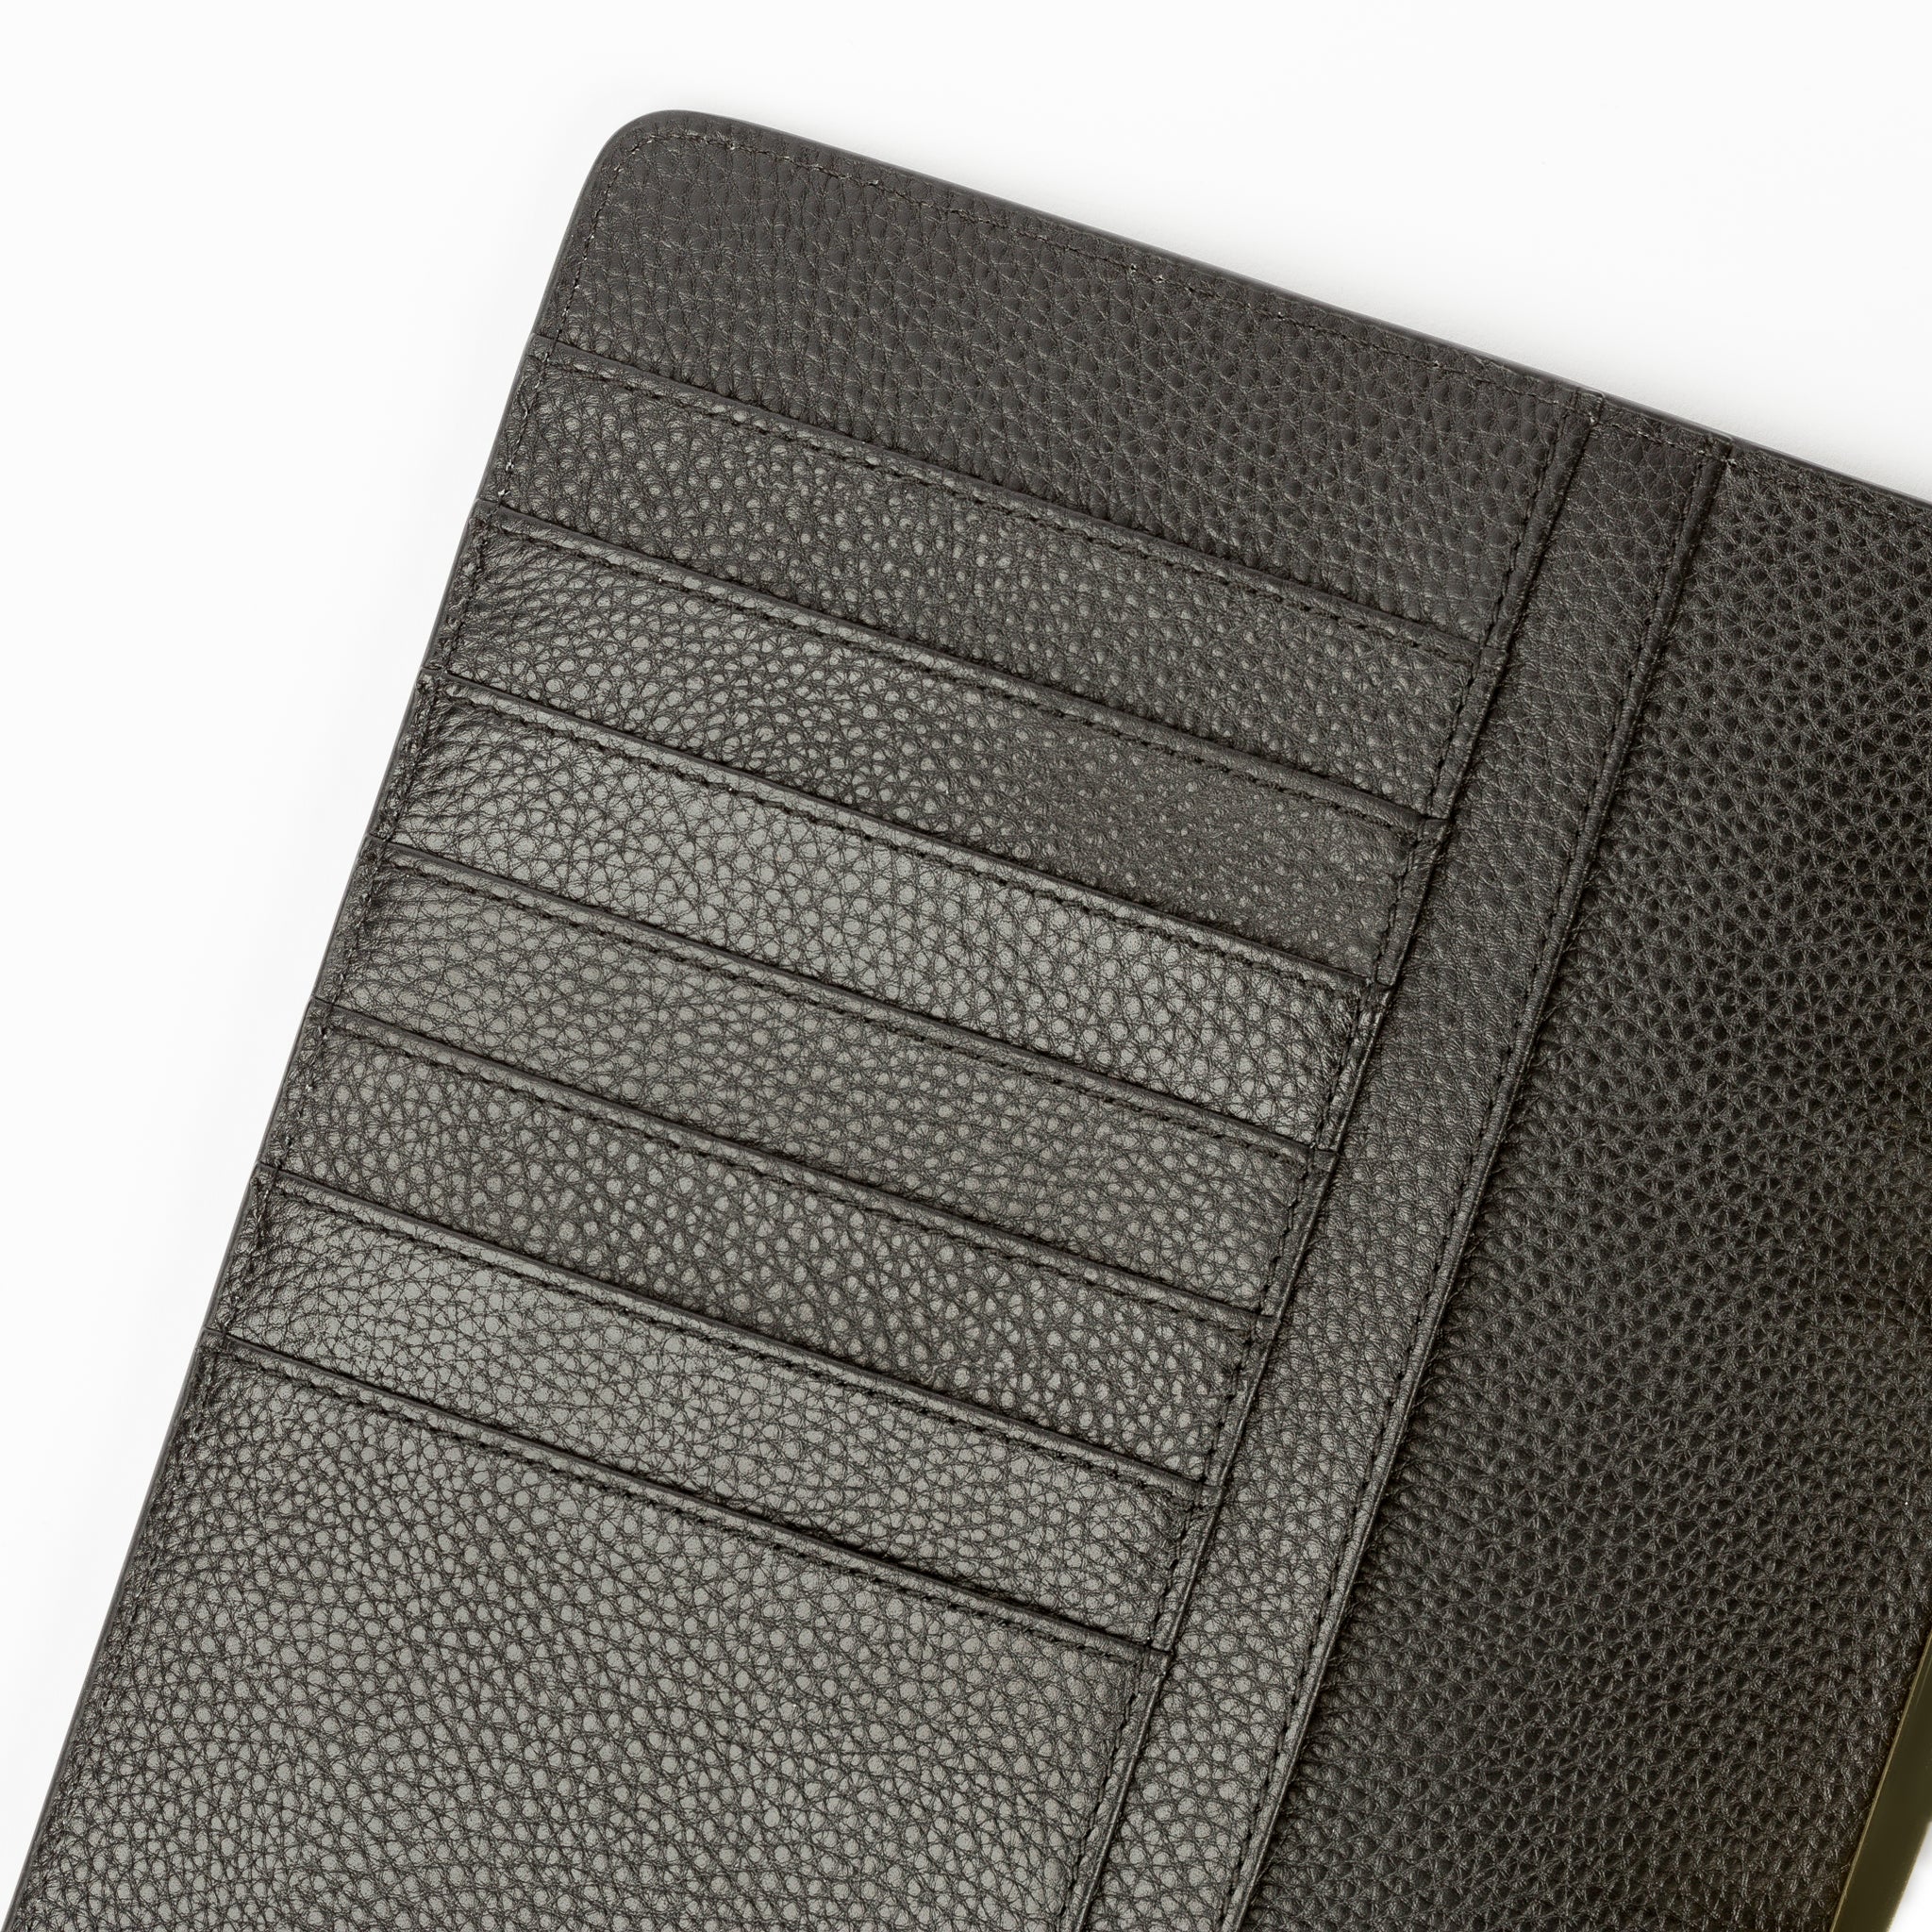 Louis Vuitton agenda cover in black taiga leather